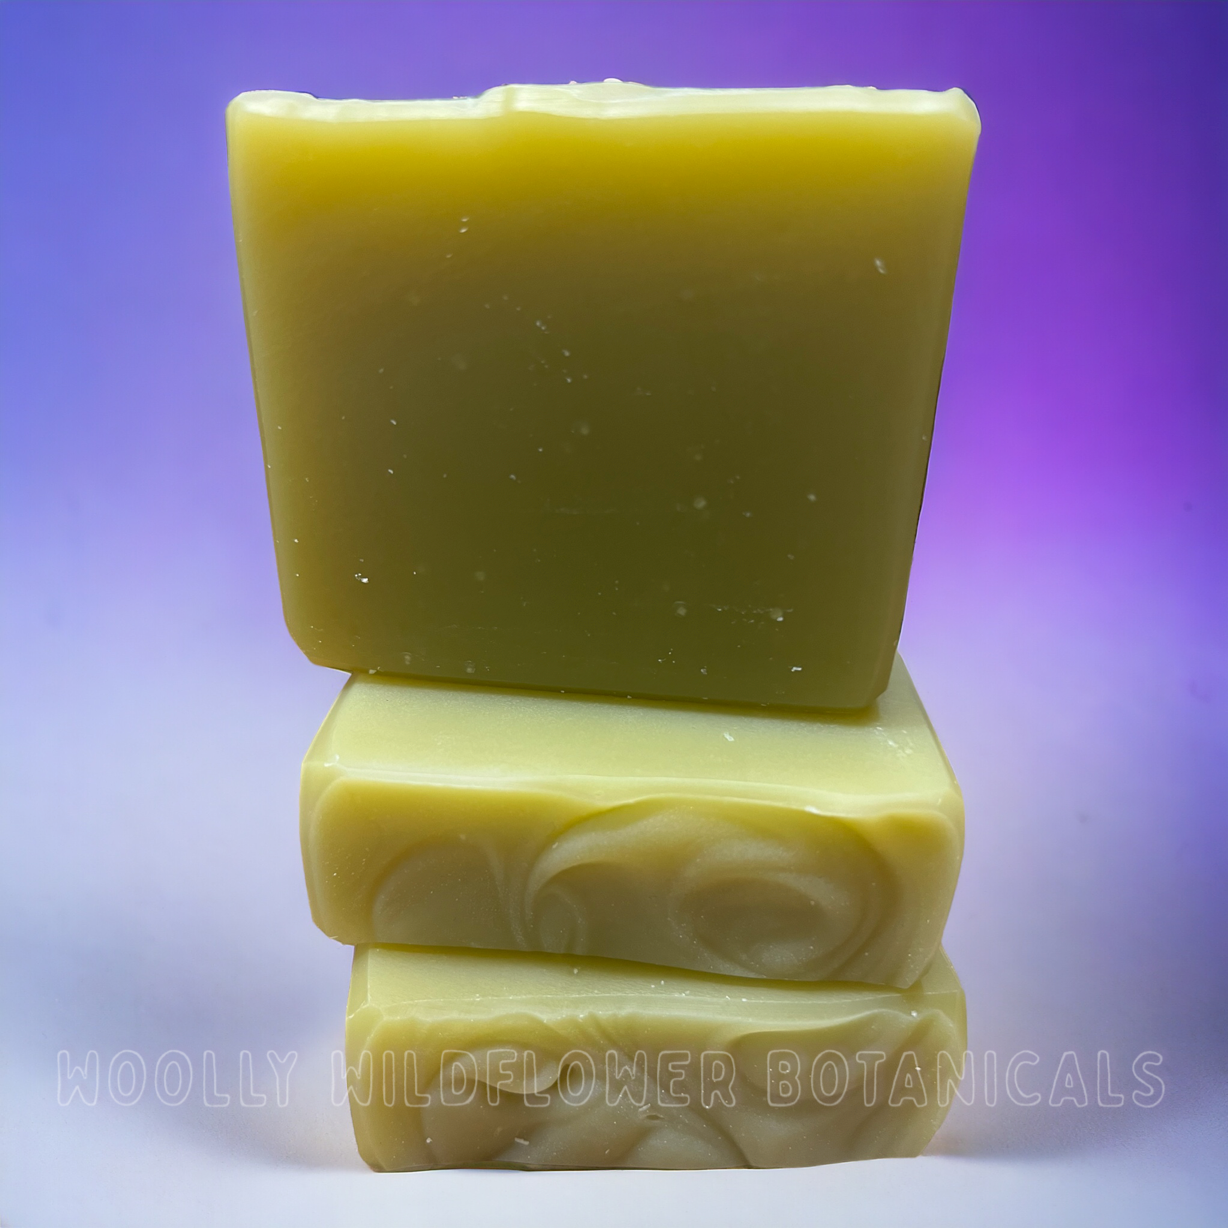 LAVENFRANK- organic shampoo bar soap